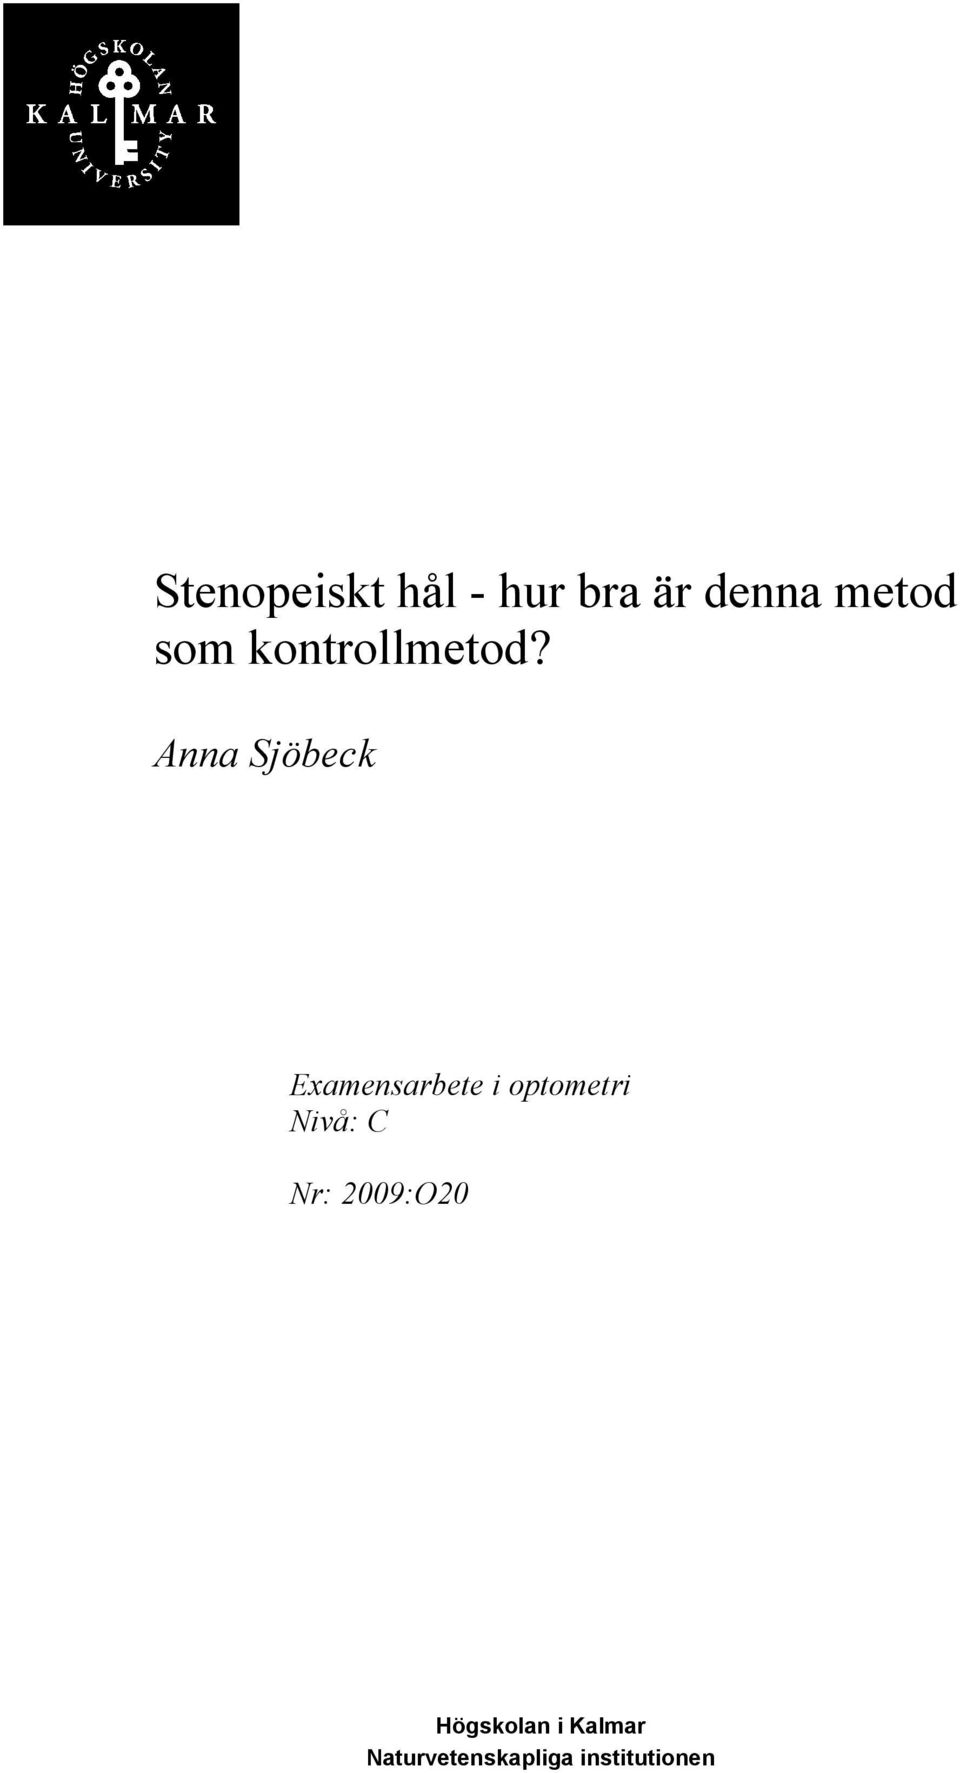 Anna Sjöbeck Examensarbete i optometri